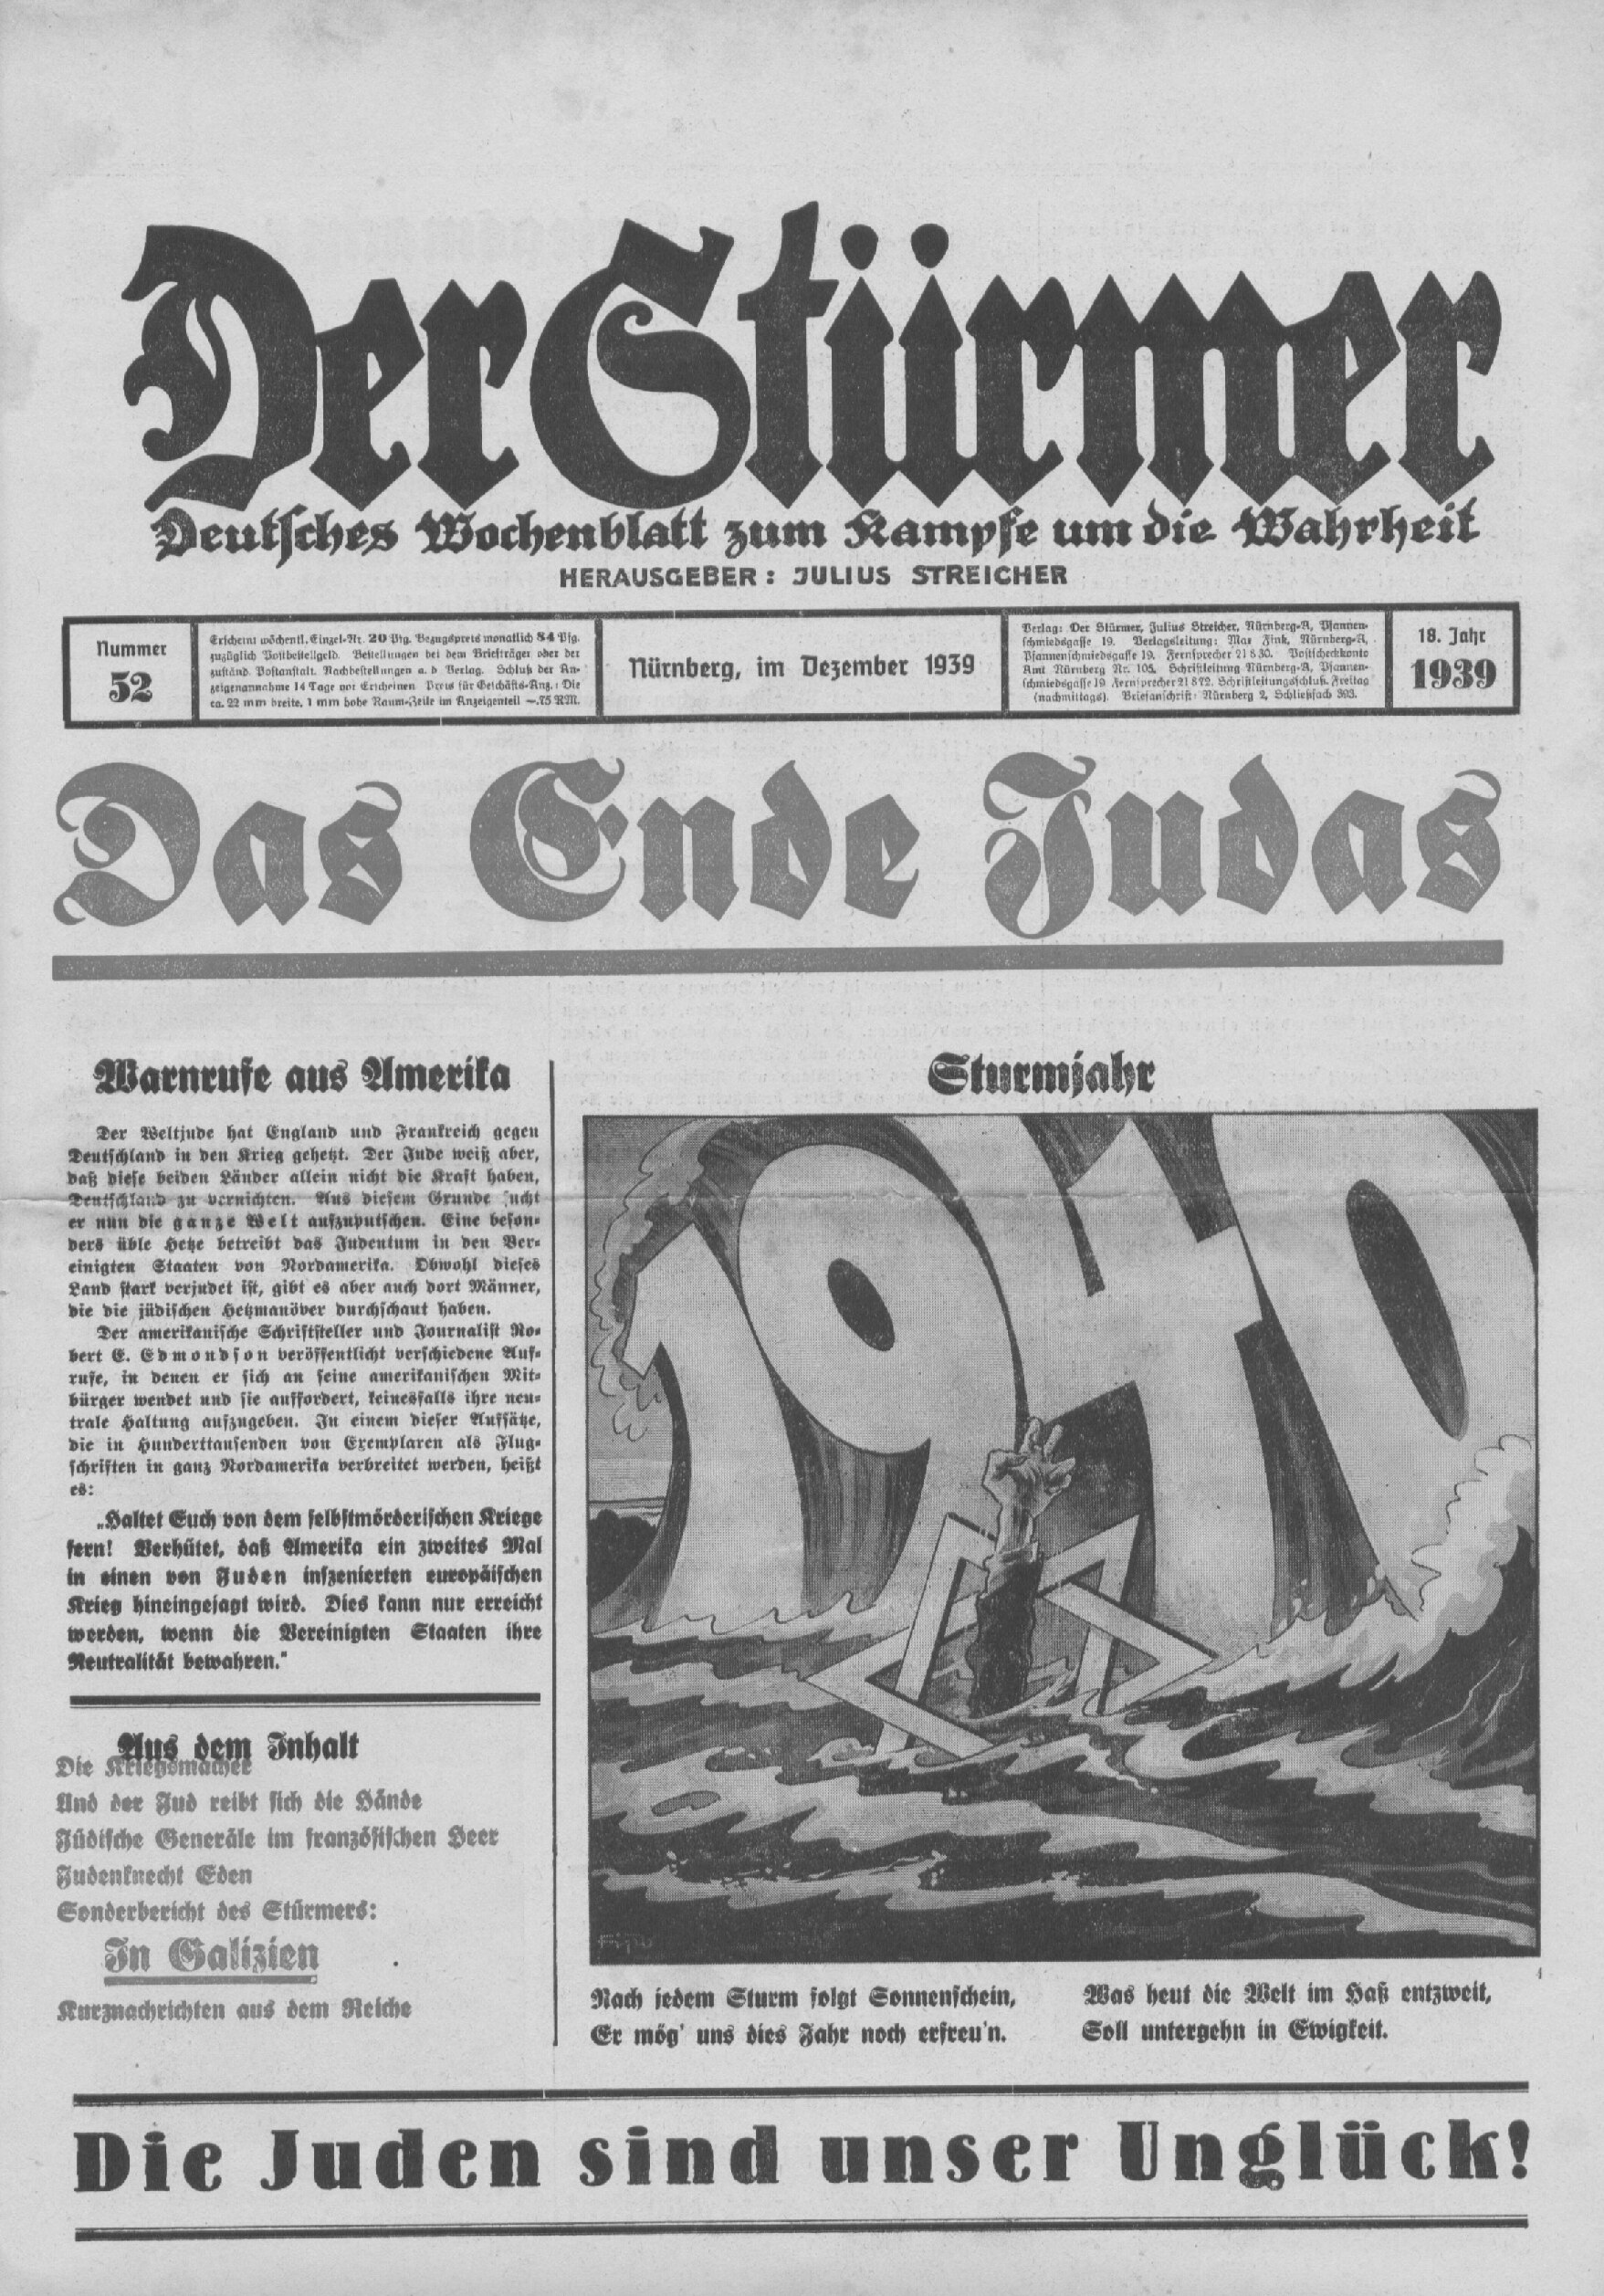 Der Stürmer - 1939 Nr. 52 - Das Ende Judas